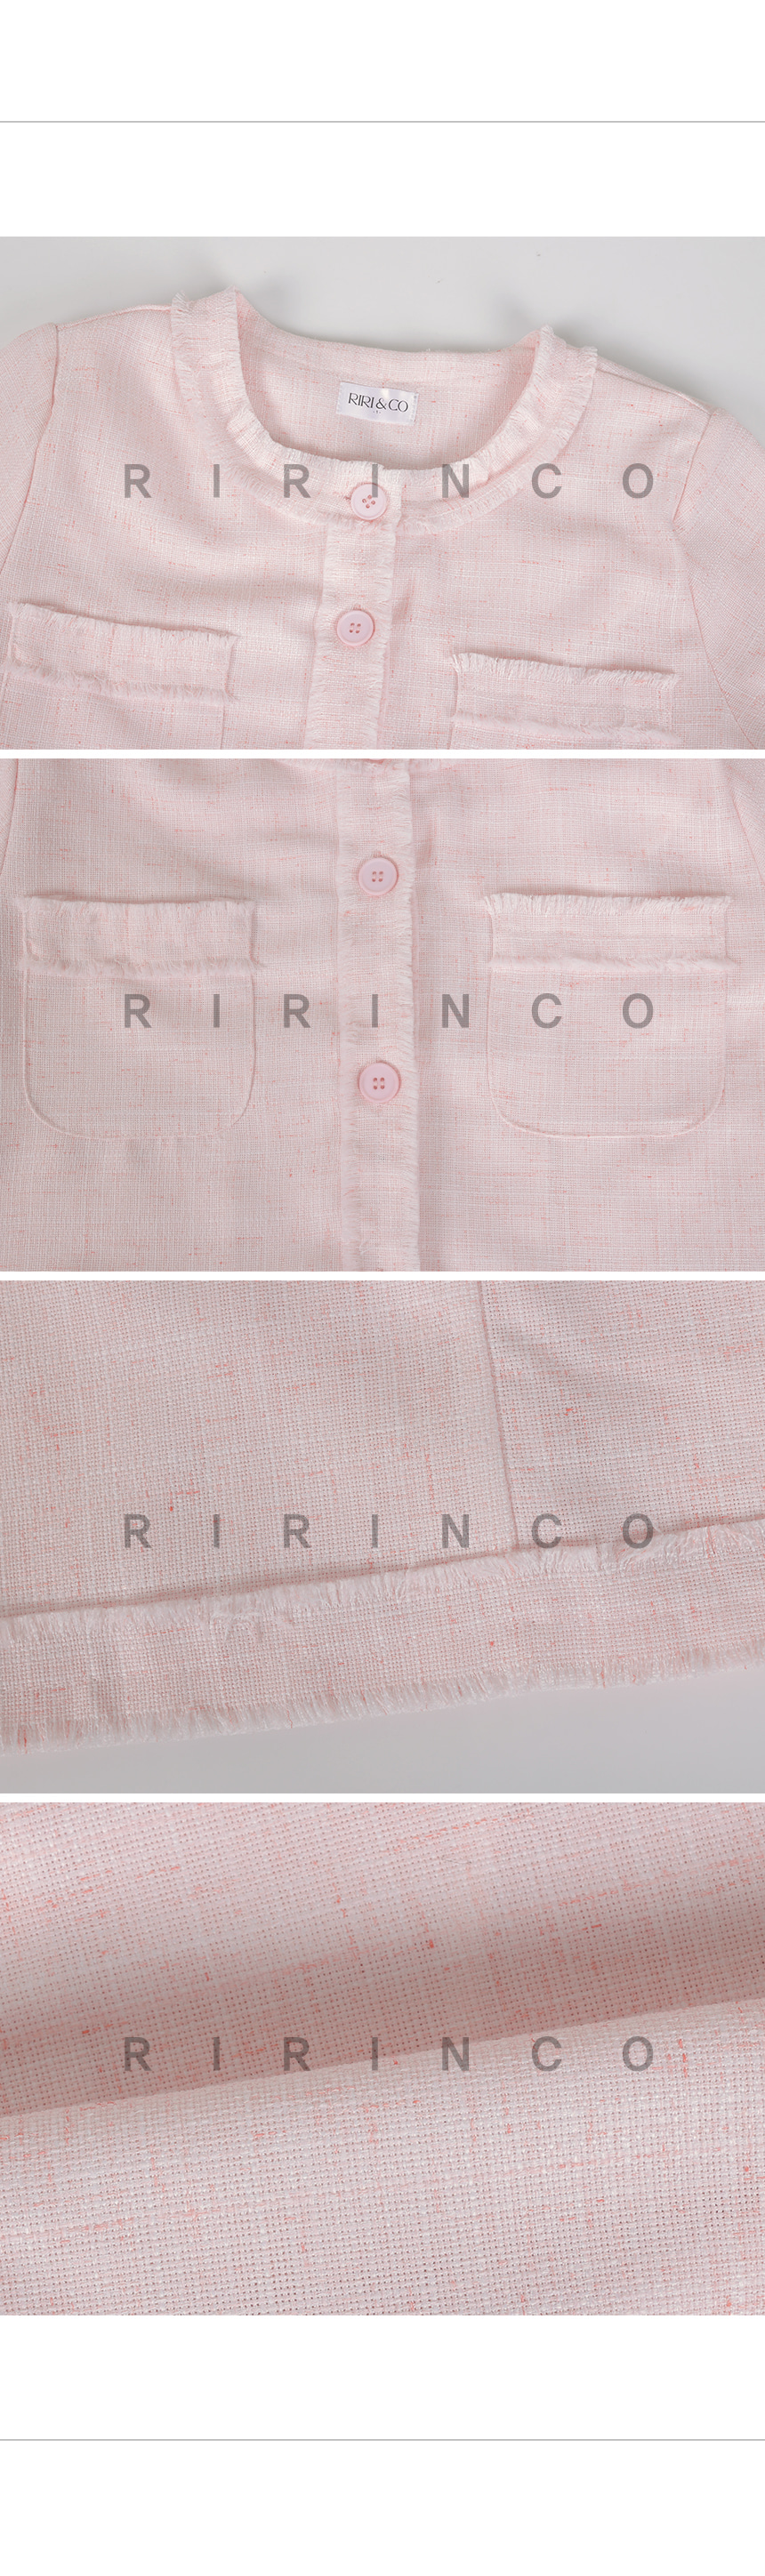 RIRINCO サマーツイードラウンドネックセミクロップドジャケット